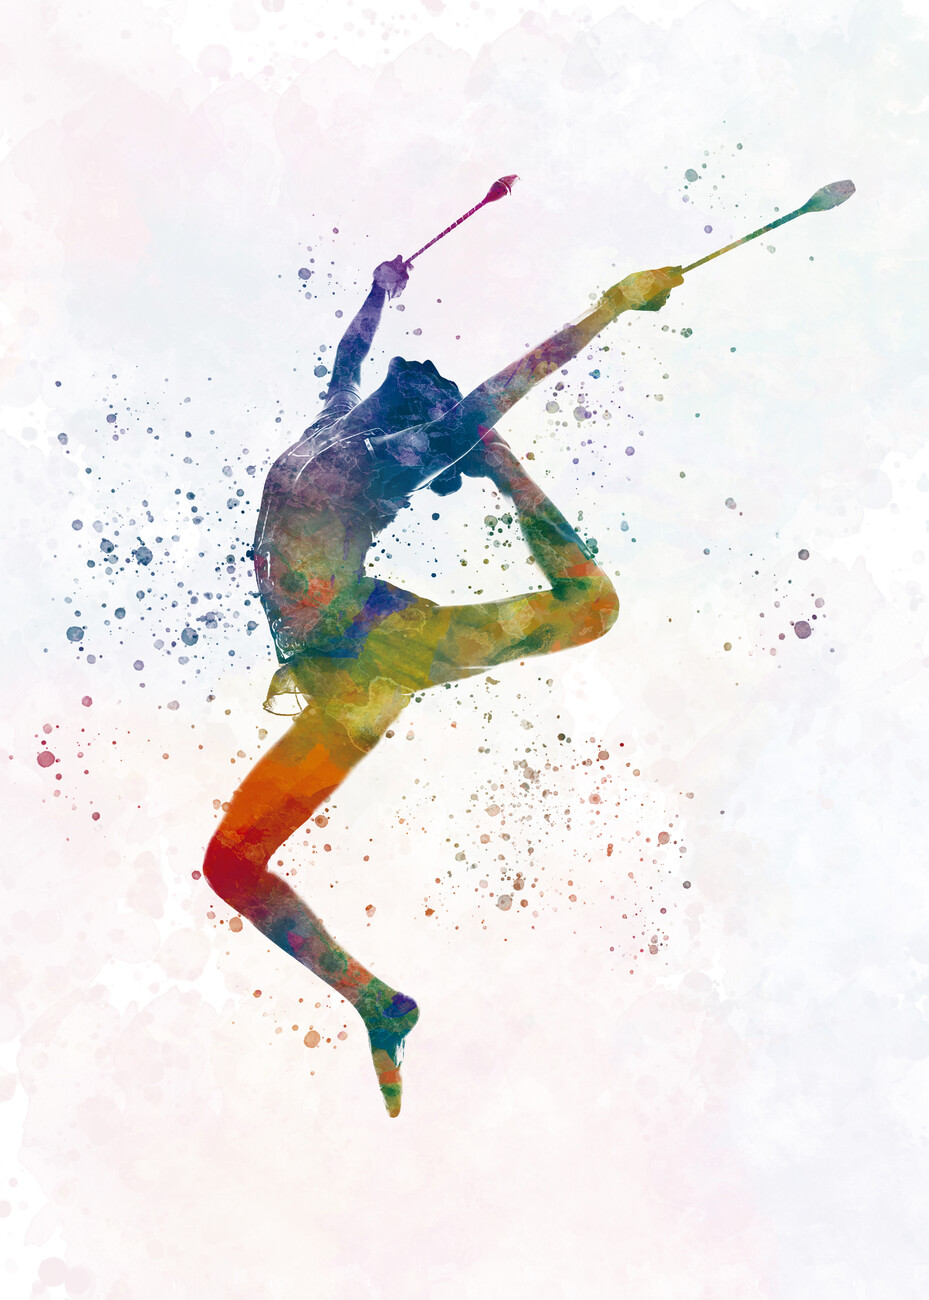 Rhythmic gymnastics in watercolor Wall Mural Buy online at Europosters